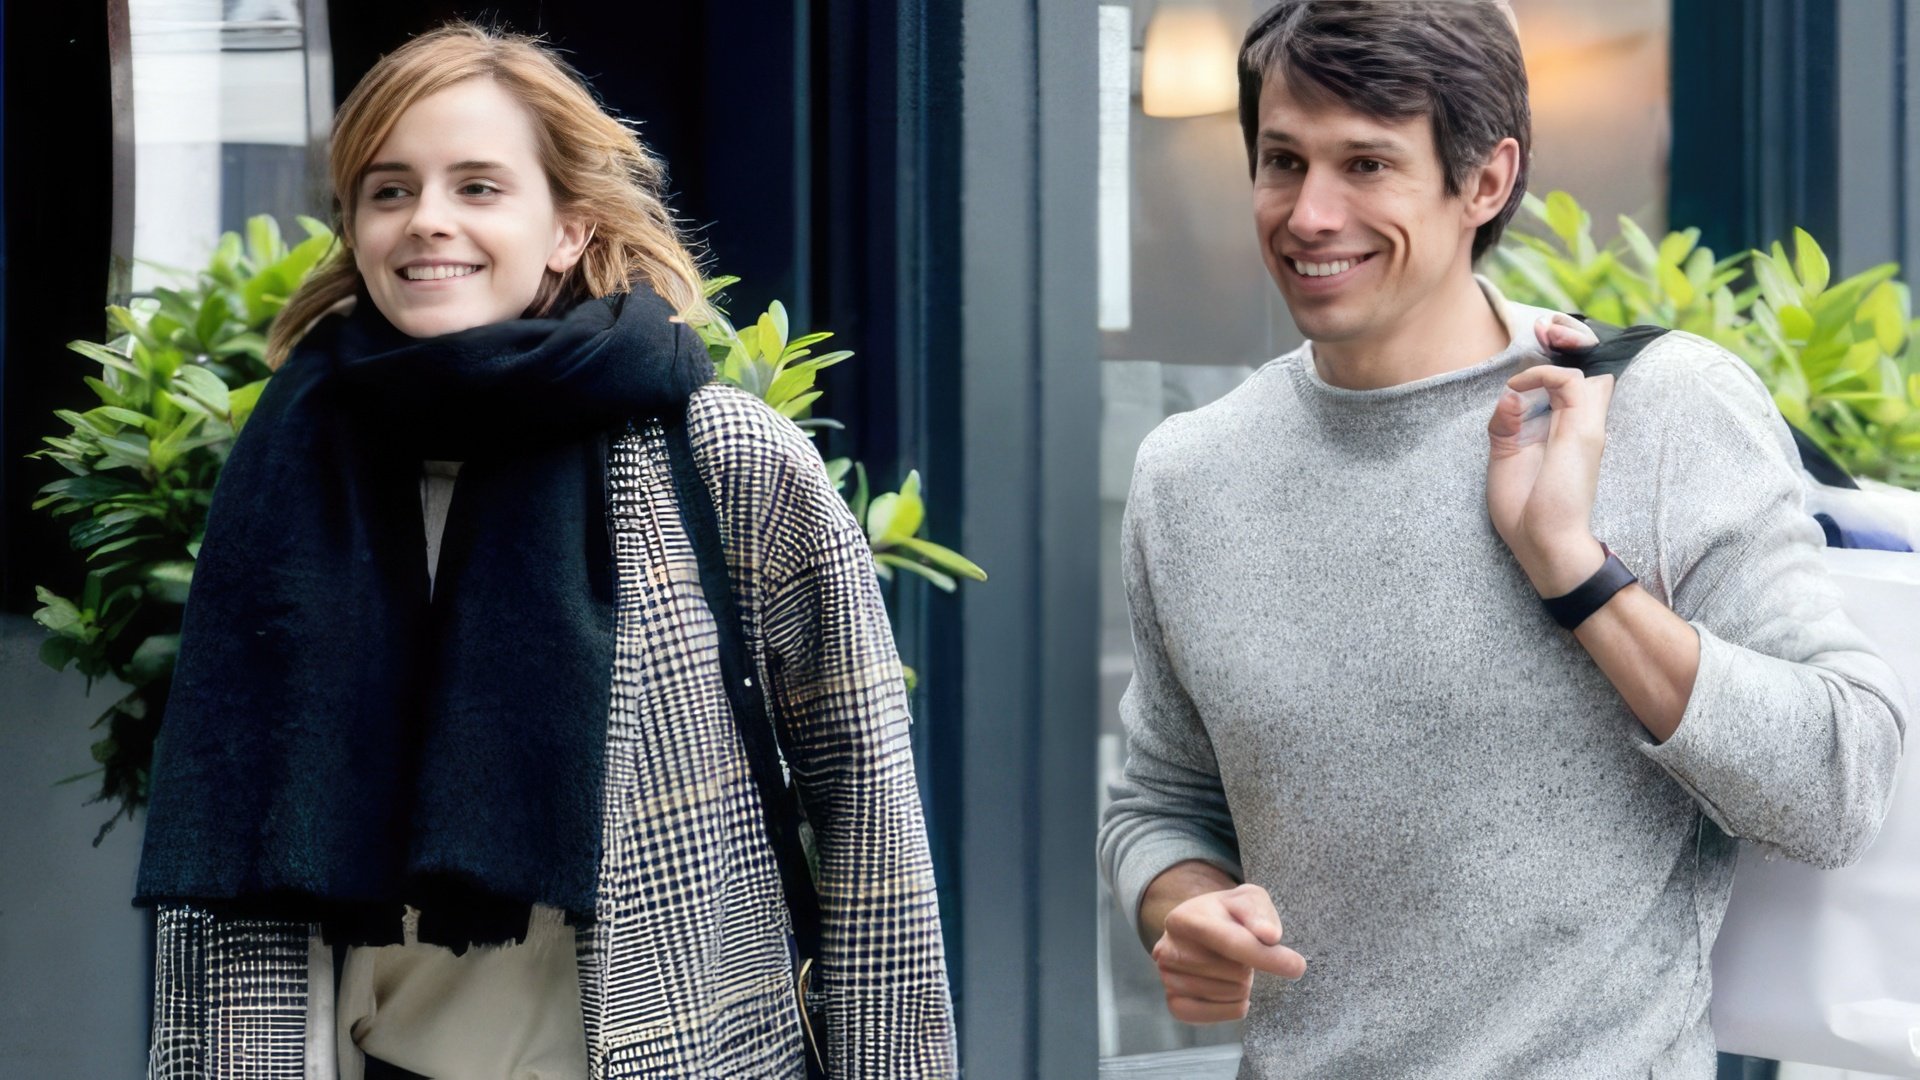 Emma Watson dated William Knight in 2016